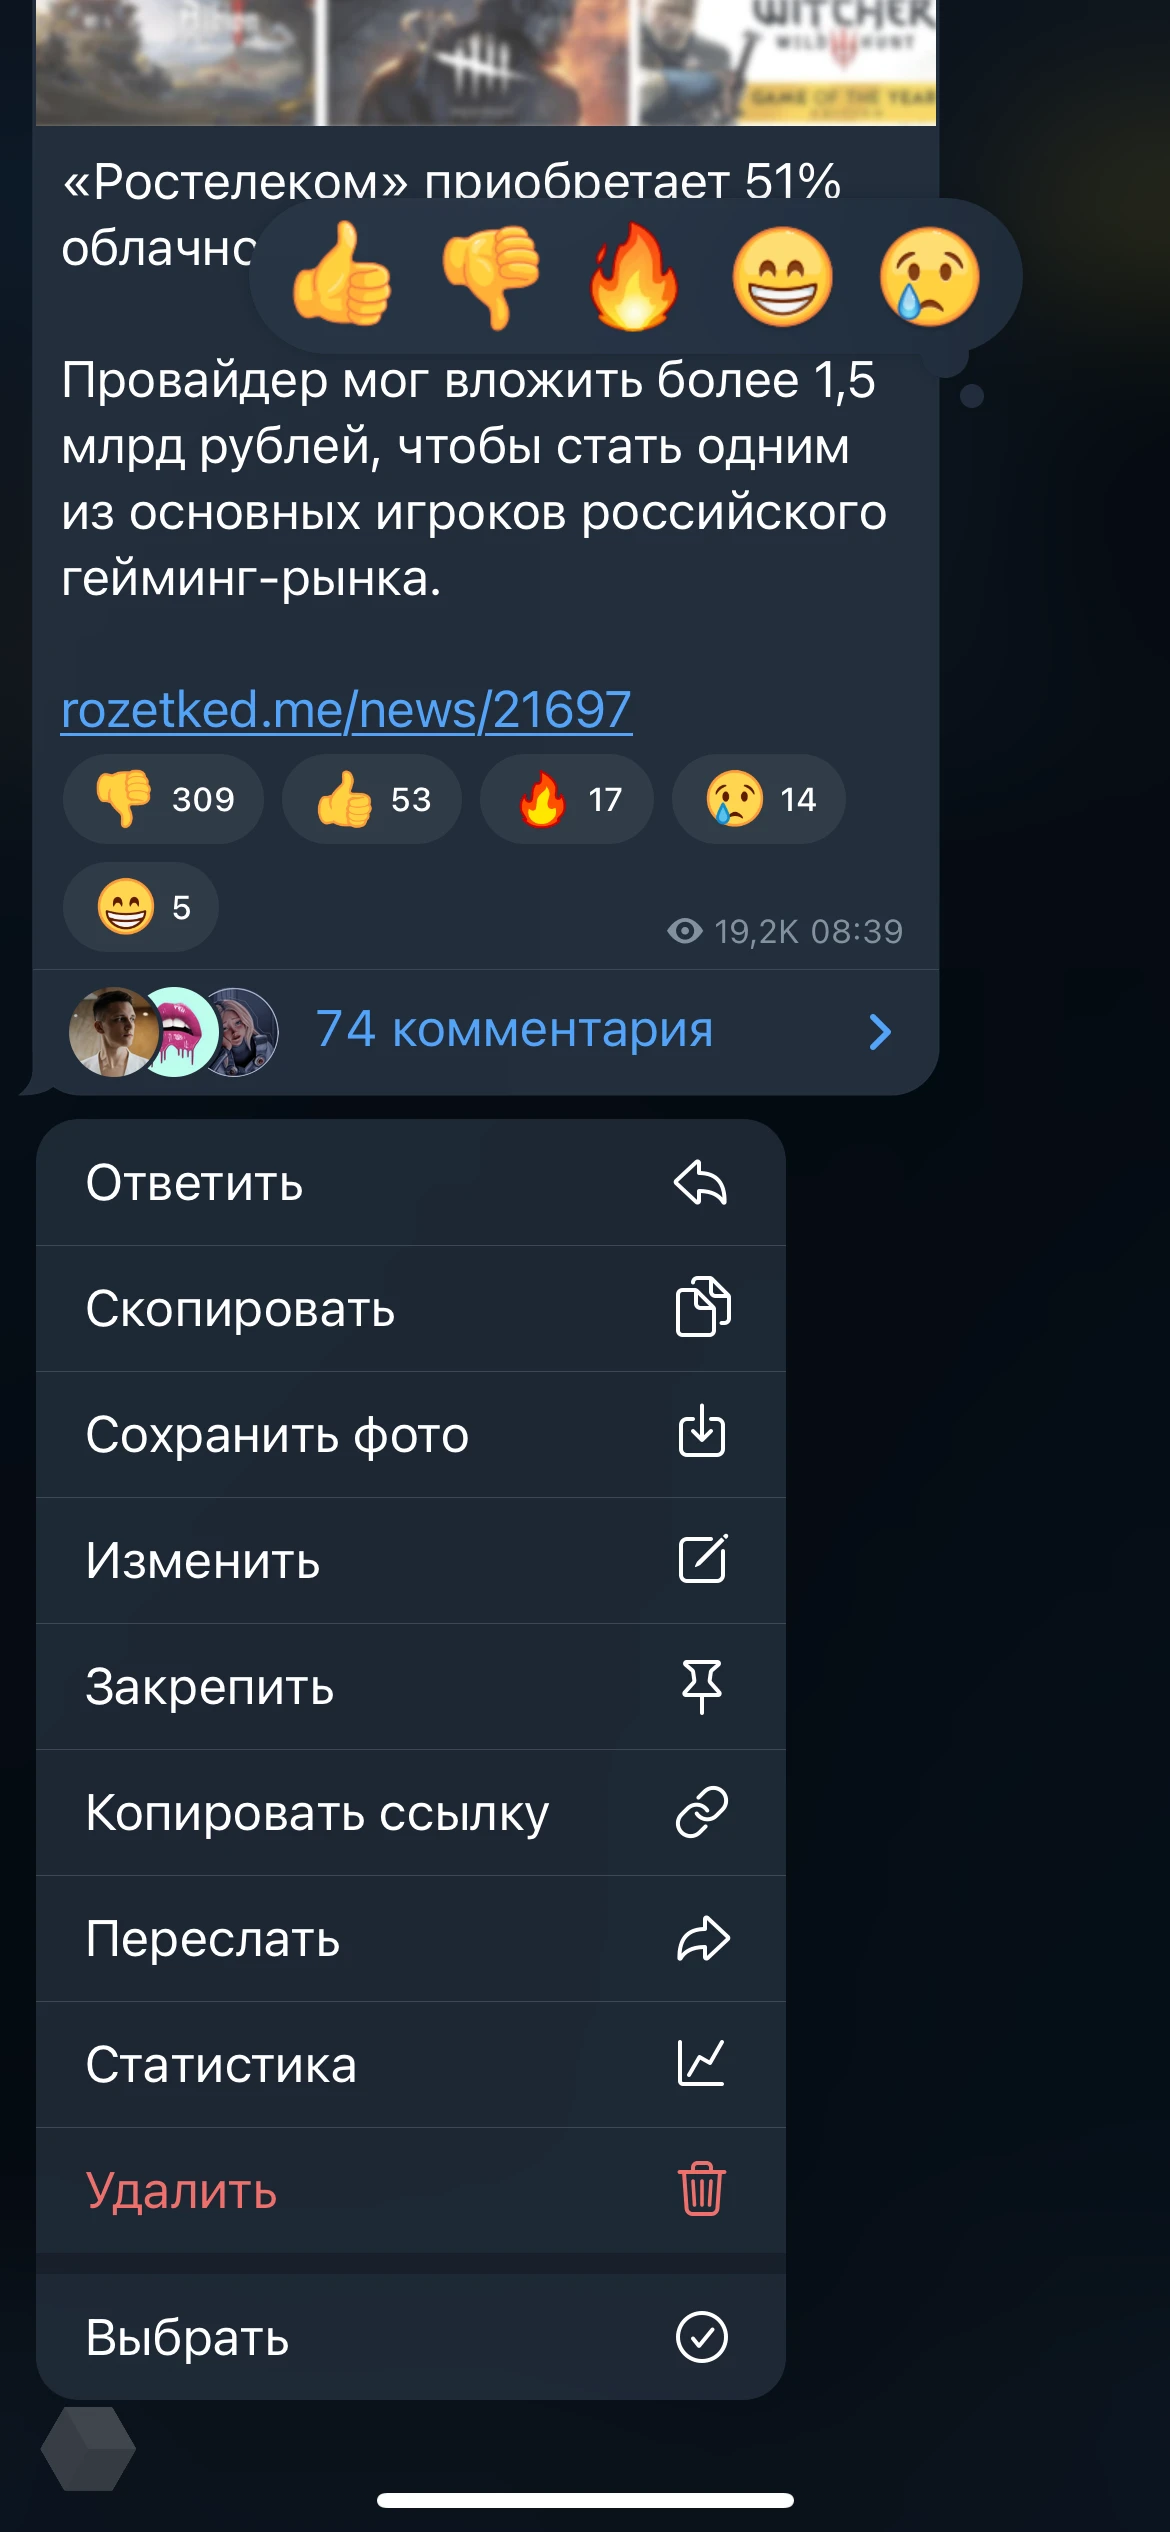 Как телеграмм перевести на русский язык на андроиде телефоне фото 106